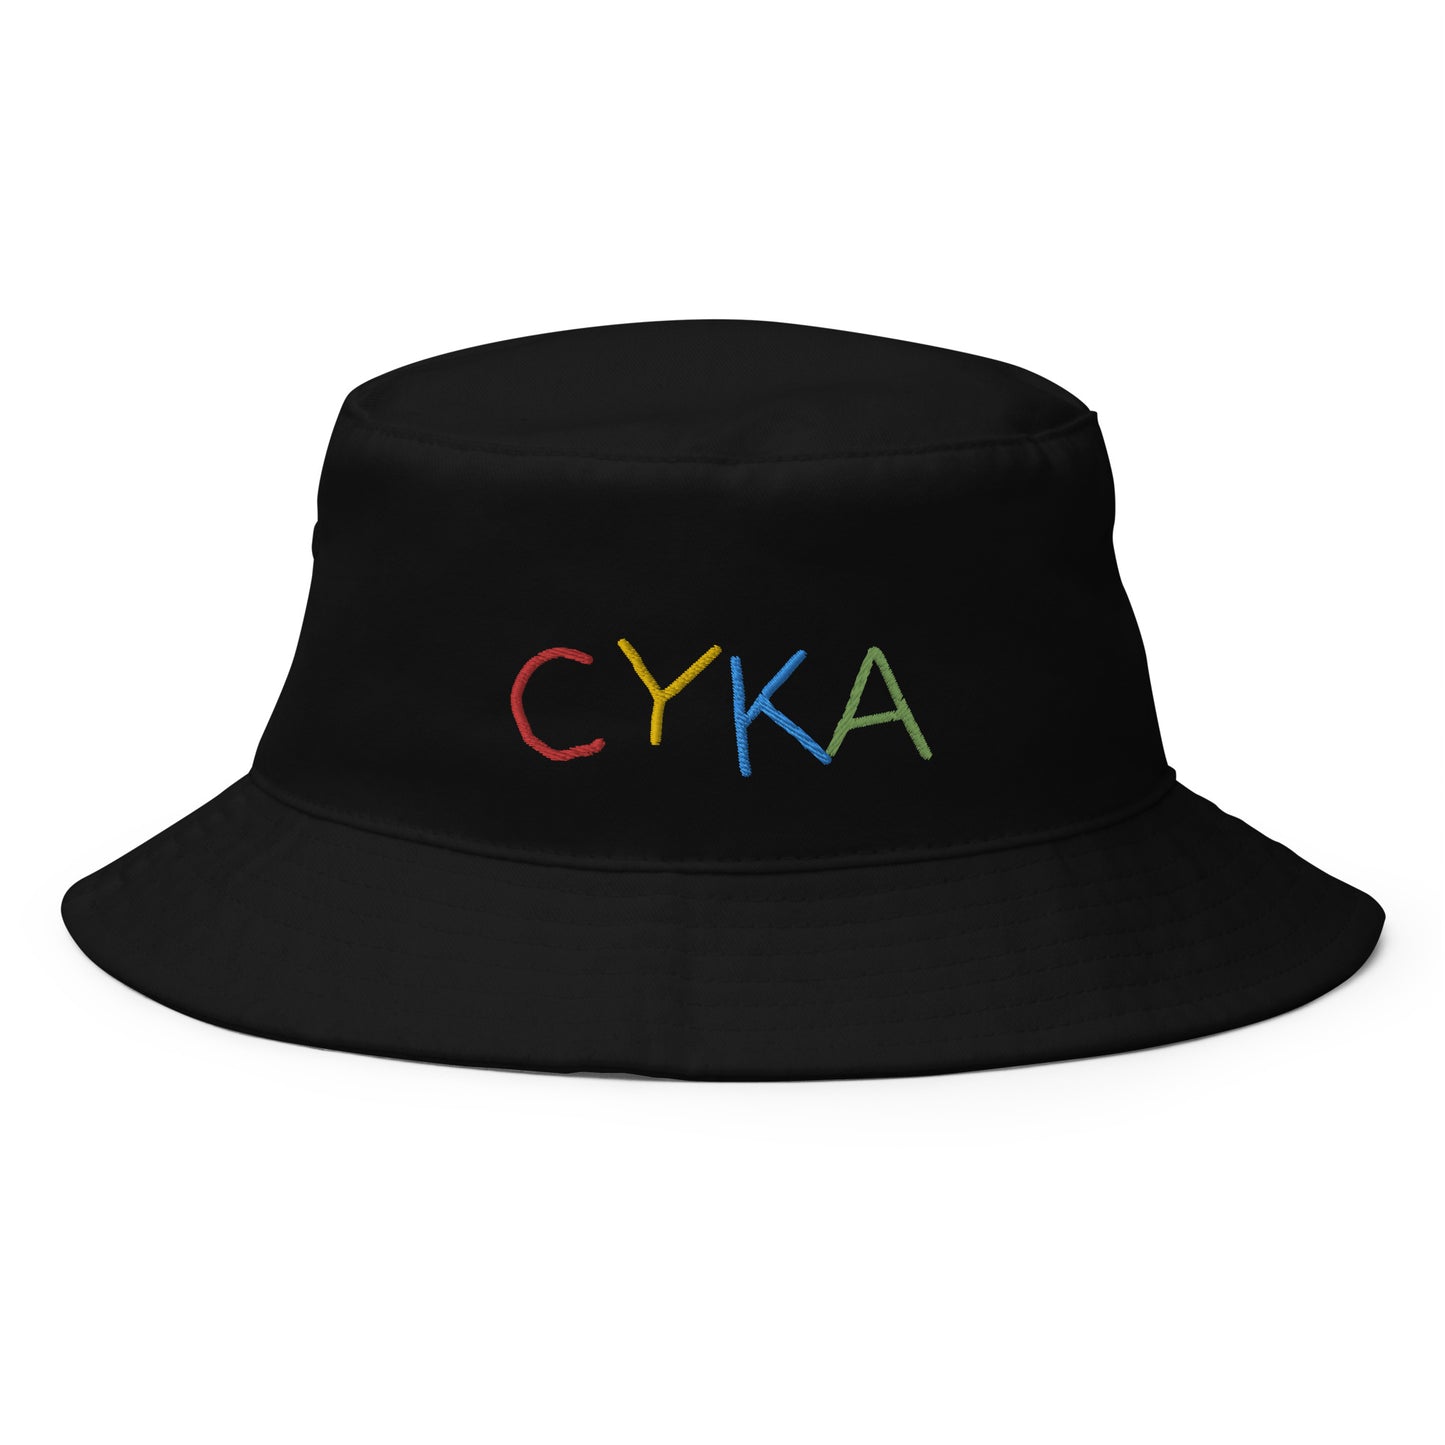 Cyka Hat